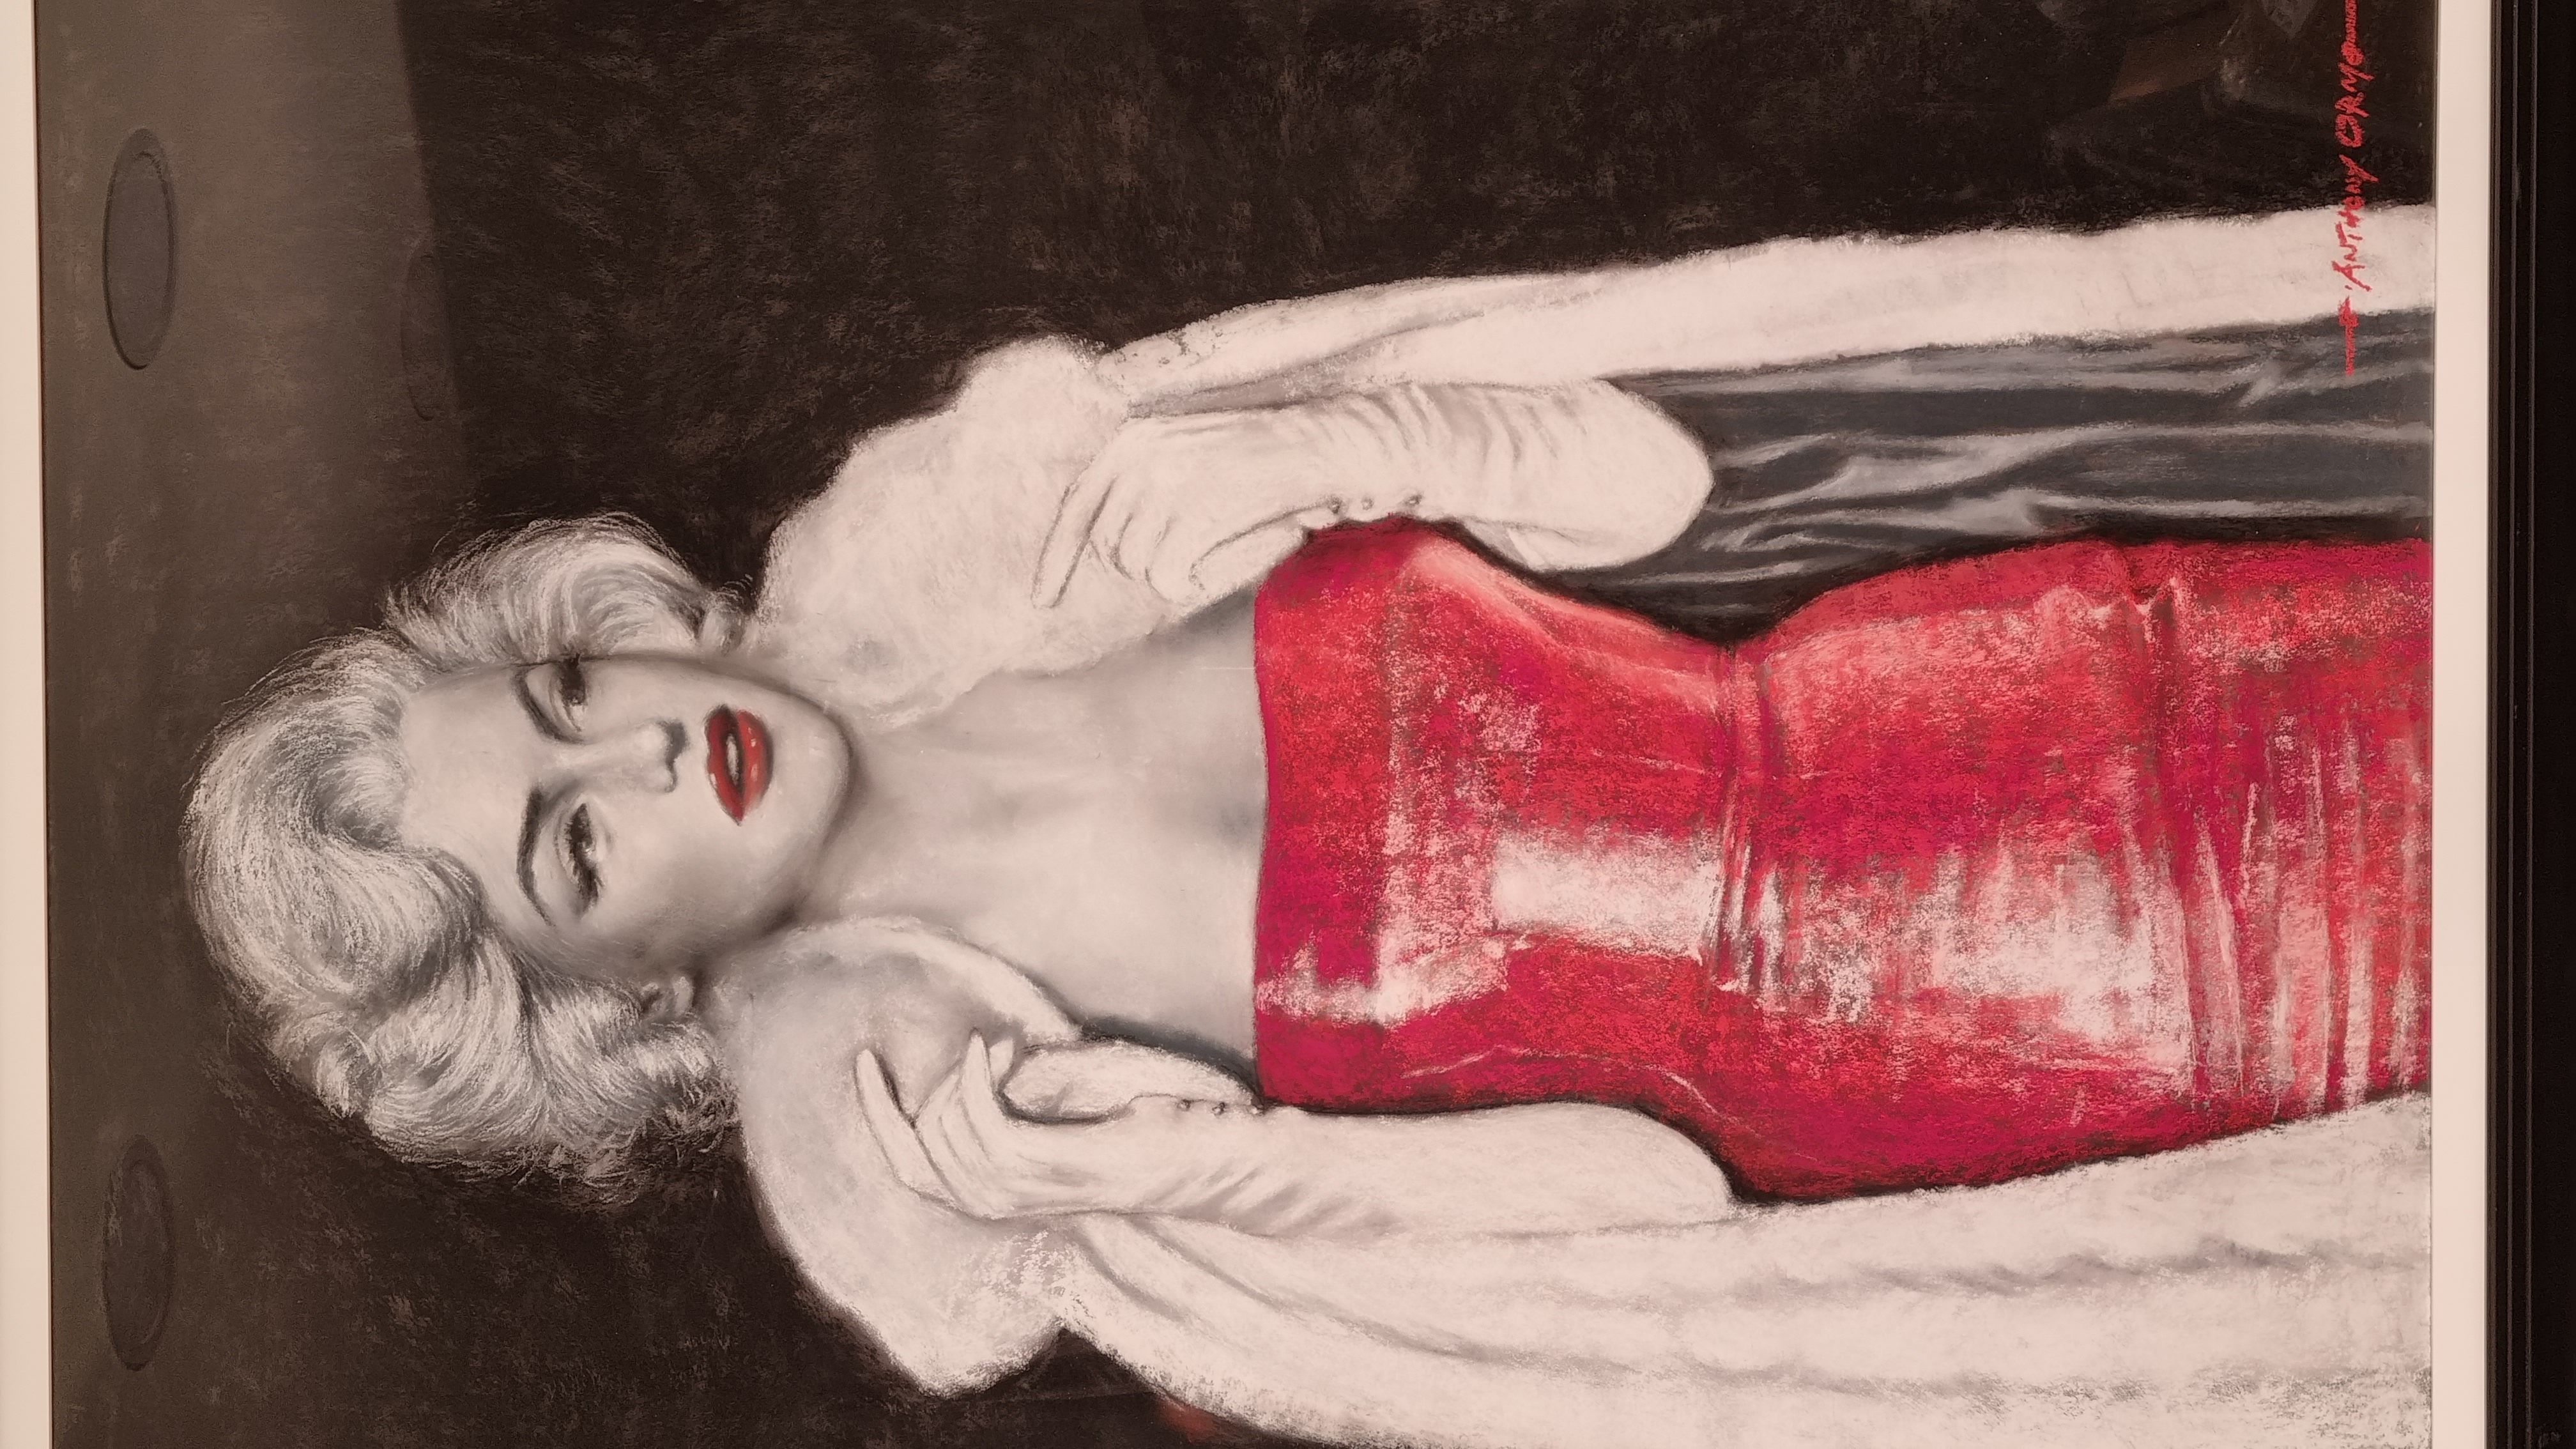 Stunning Original Painting of Marilyn Monroe - Image 5 of 6